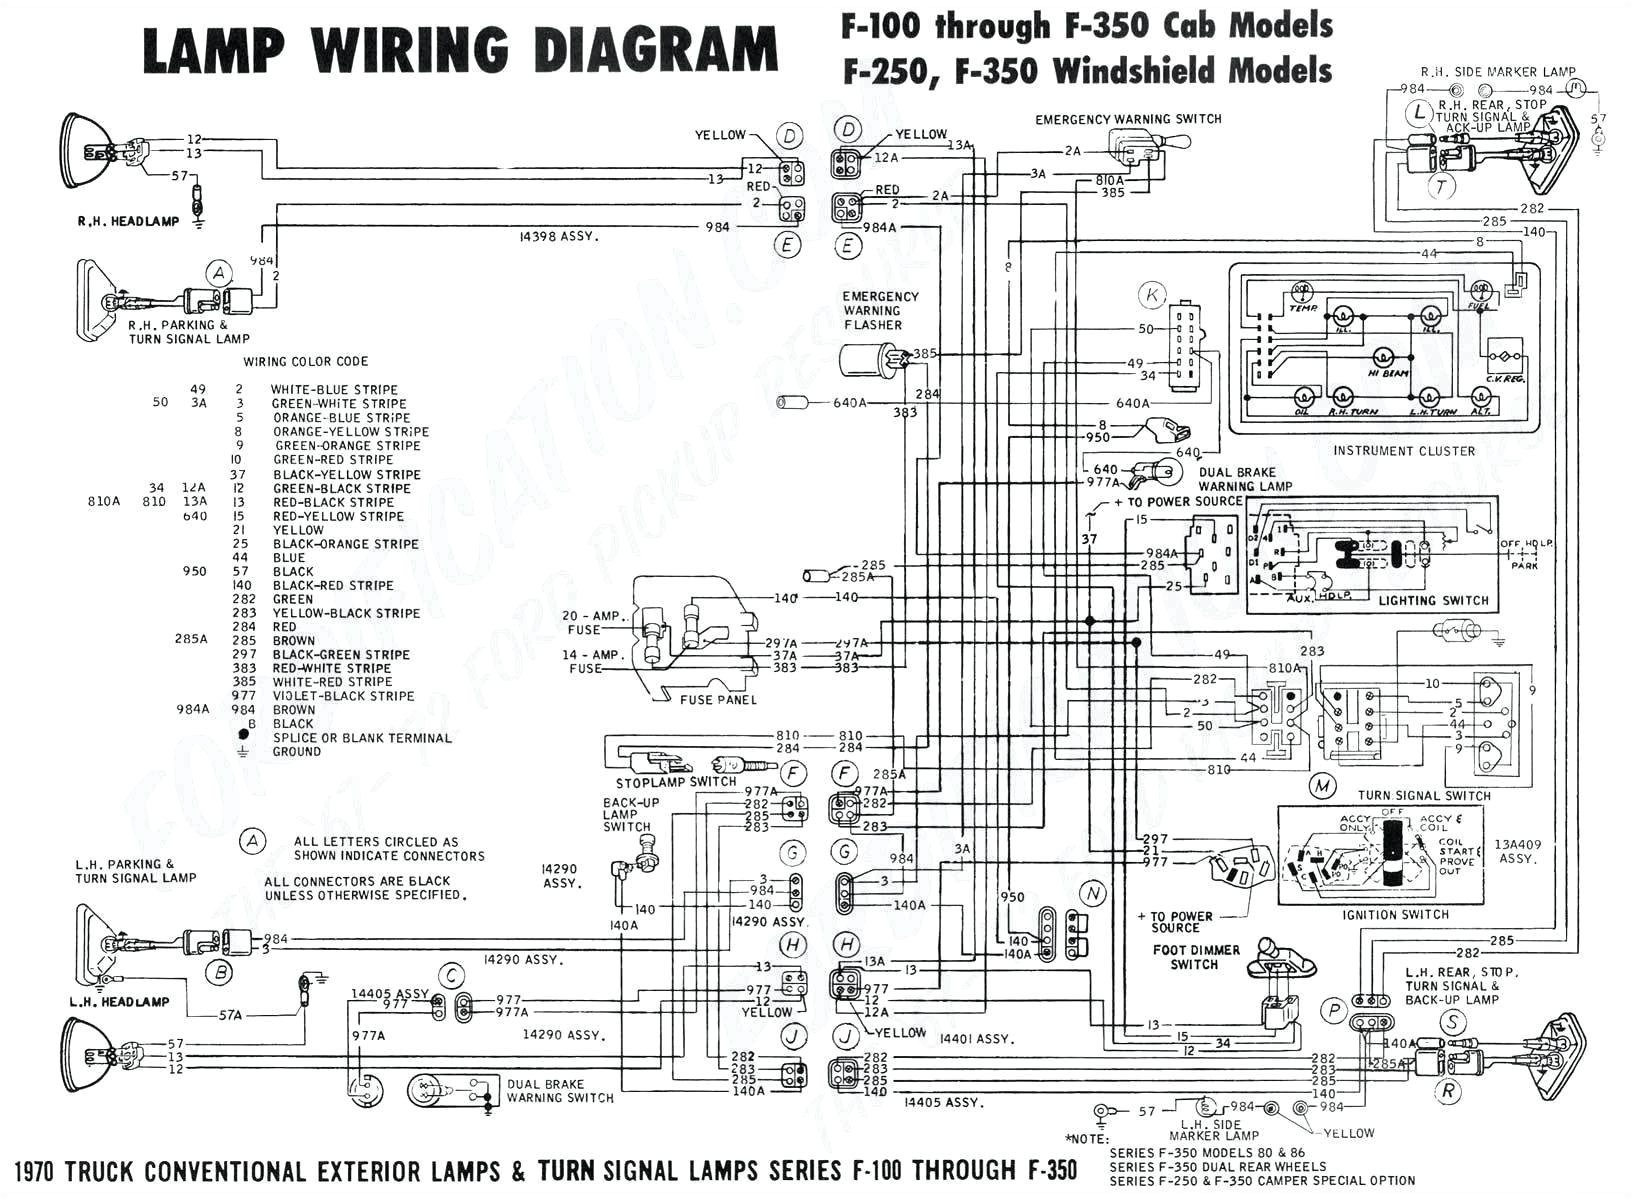 opel turn signal switch wiring diagram schema wiring diagram database chevy turn signal wiring diagram for 38